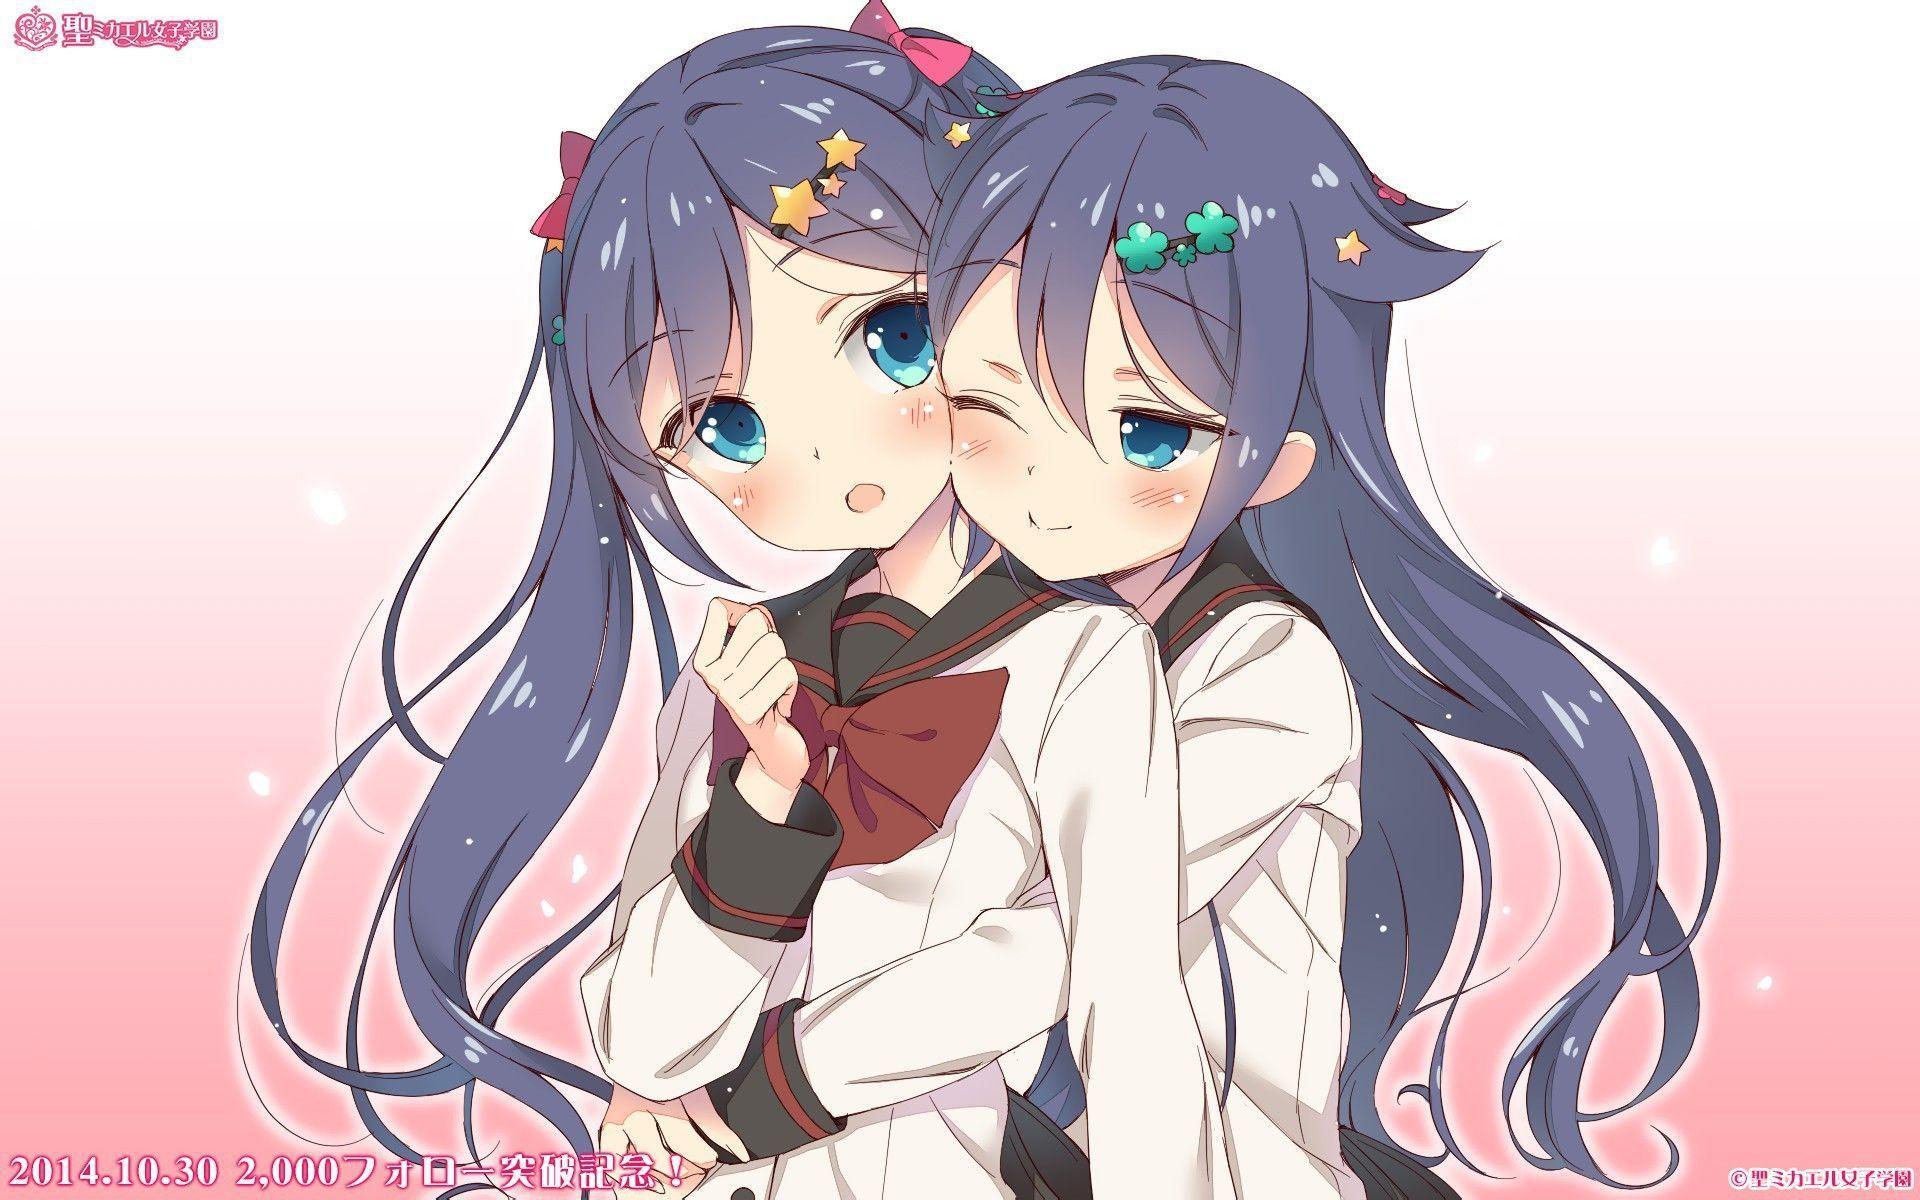 best of Lesbians Anime twins